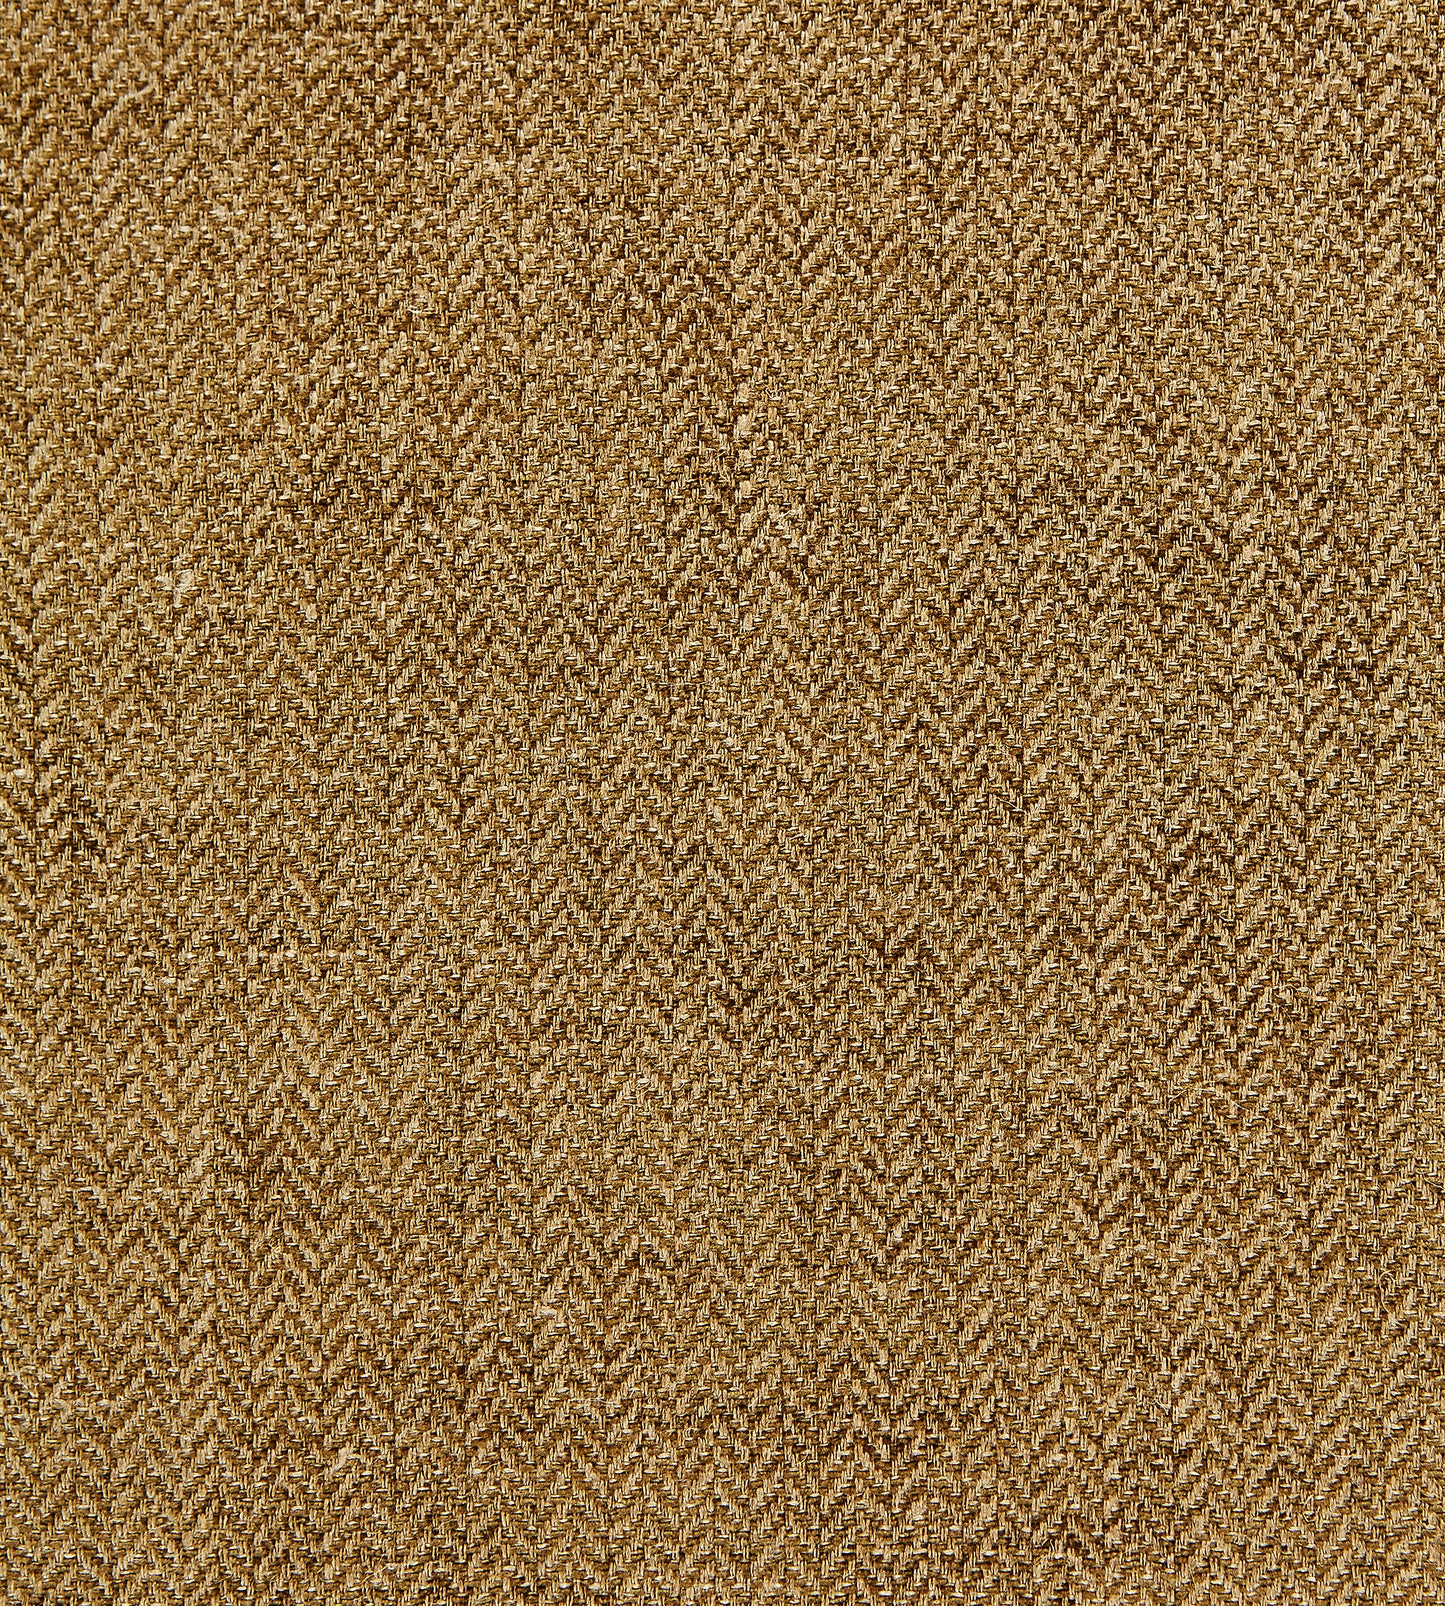 Purchase Scalamandre Fabric Product# SC 002427006, Oxford Herringbone Weave Olive 1